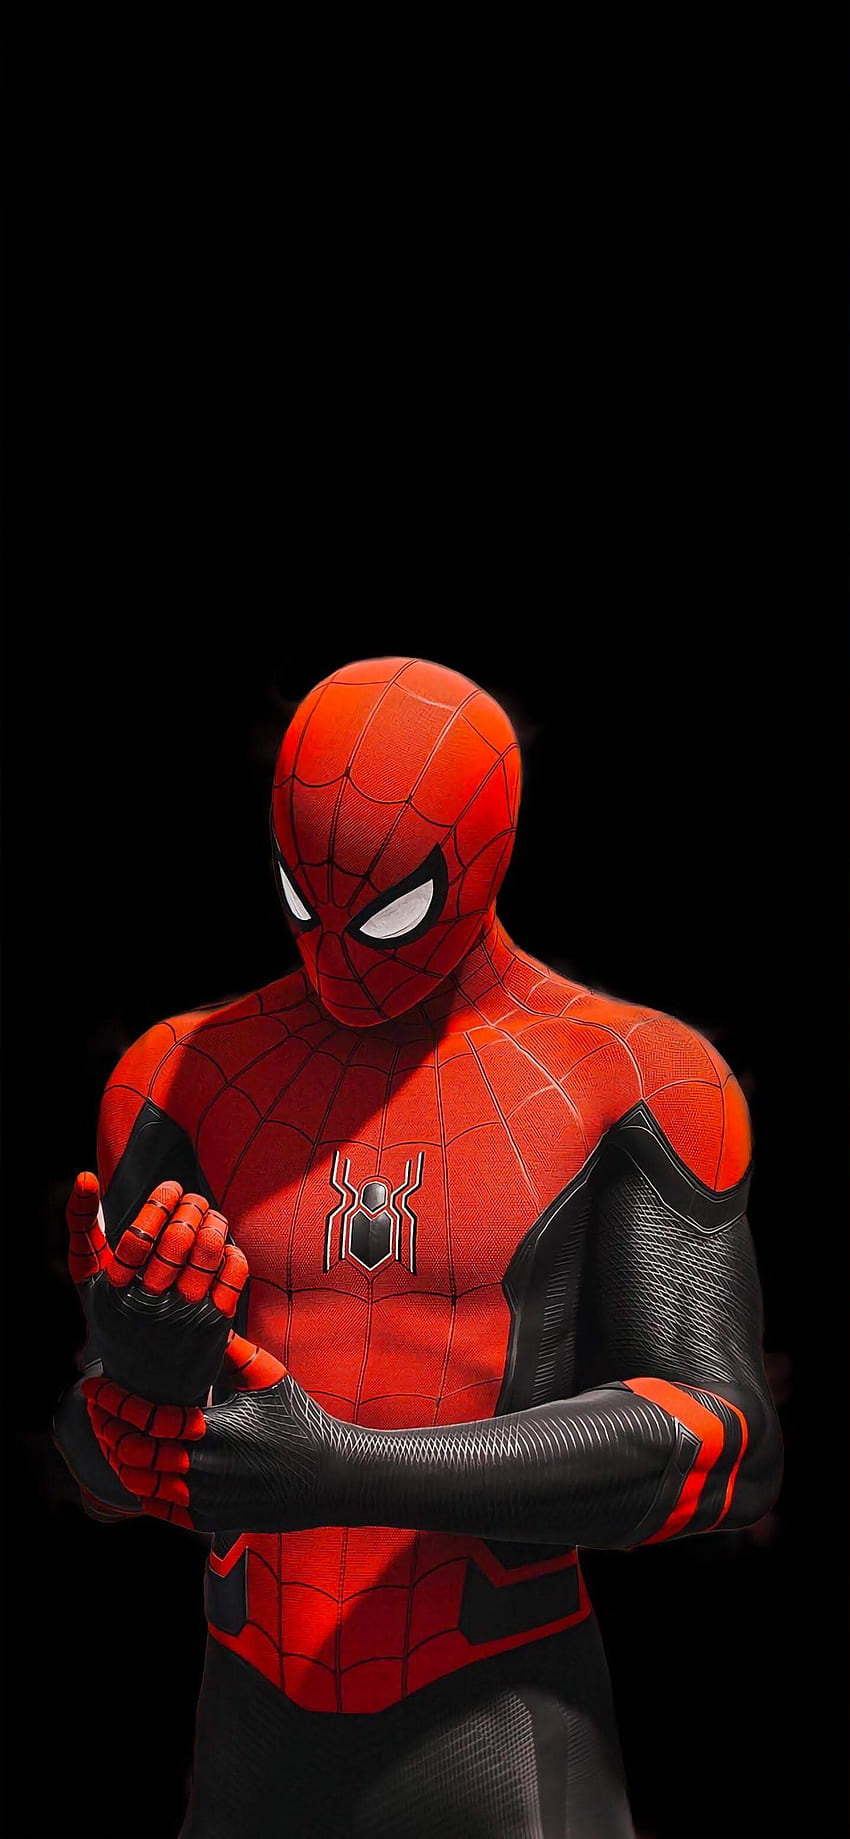 Manusia laba-laba. Komik Marvel, Avengers, seni spiderman Marvel, Spider Man For Mobile wallpaper ponsel HD